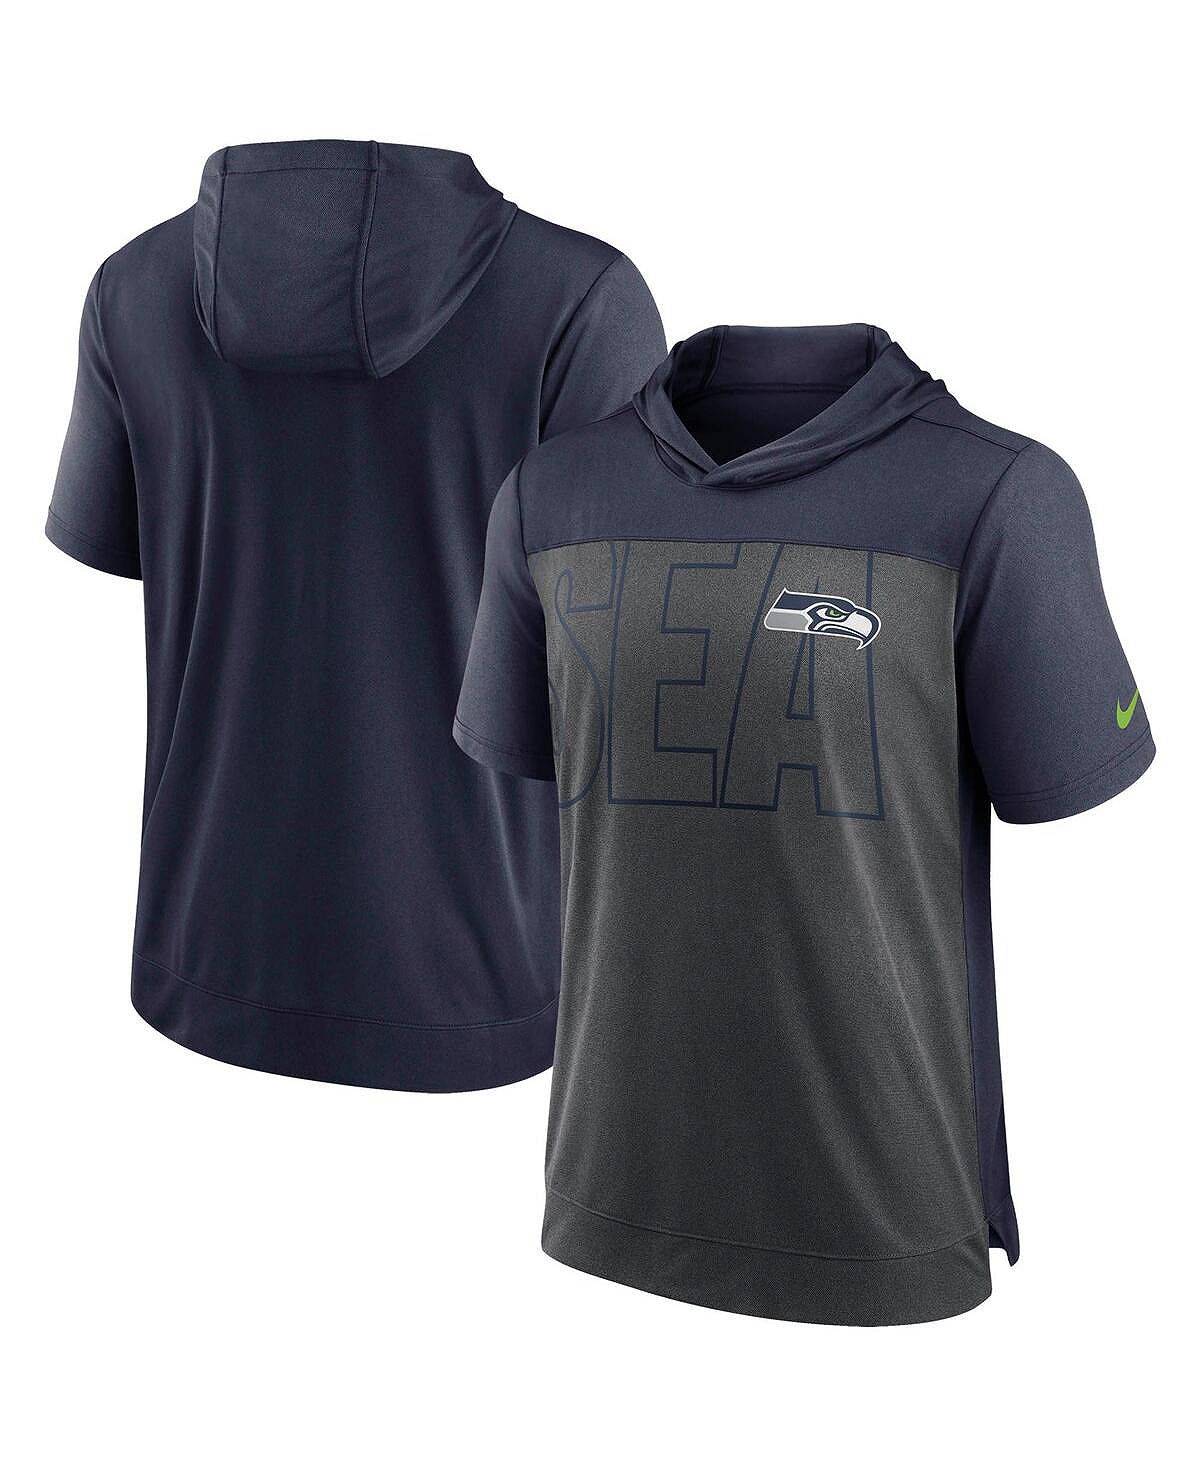 Мужская футболка с капюшоном цвета темно-серого меланжевого цвета college navy seattle seahawks performance hoodie Nike, мульти printio кепка seattle seahawks